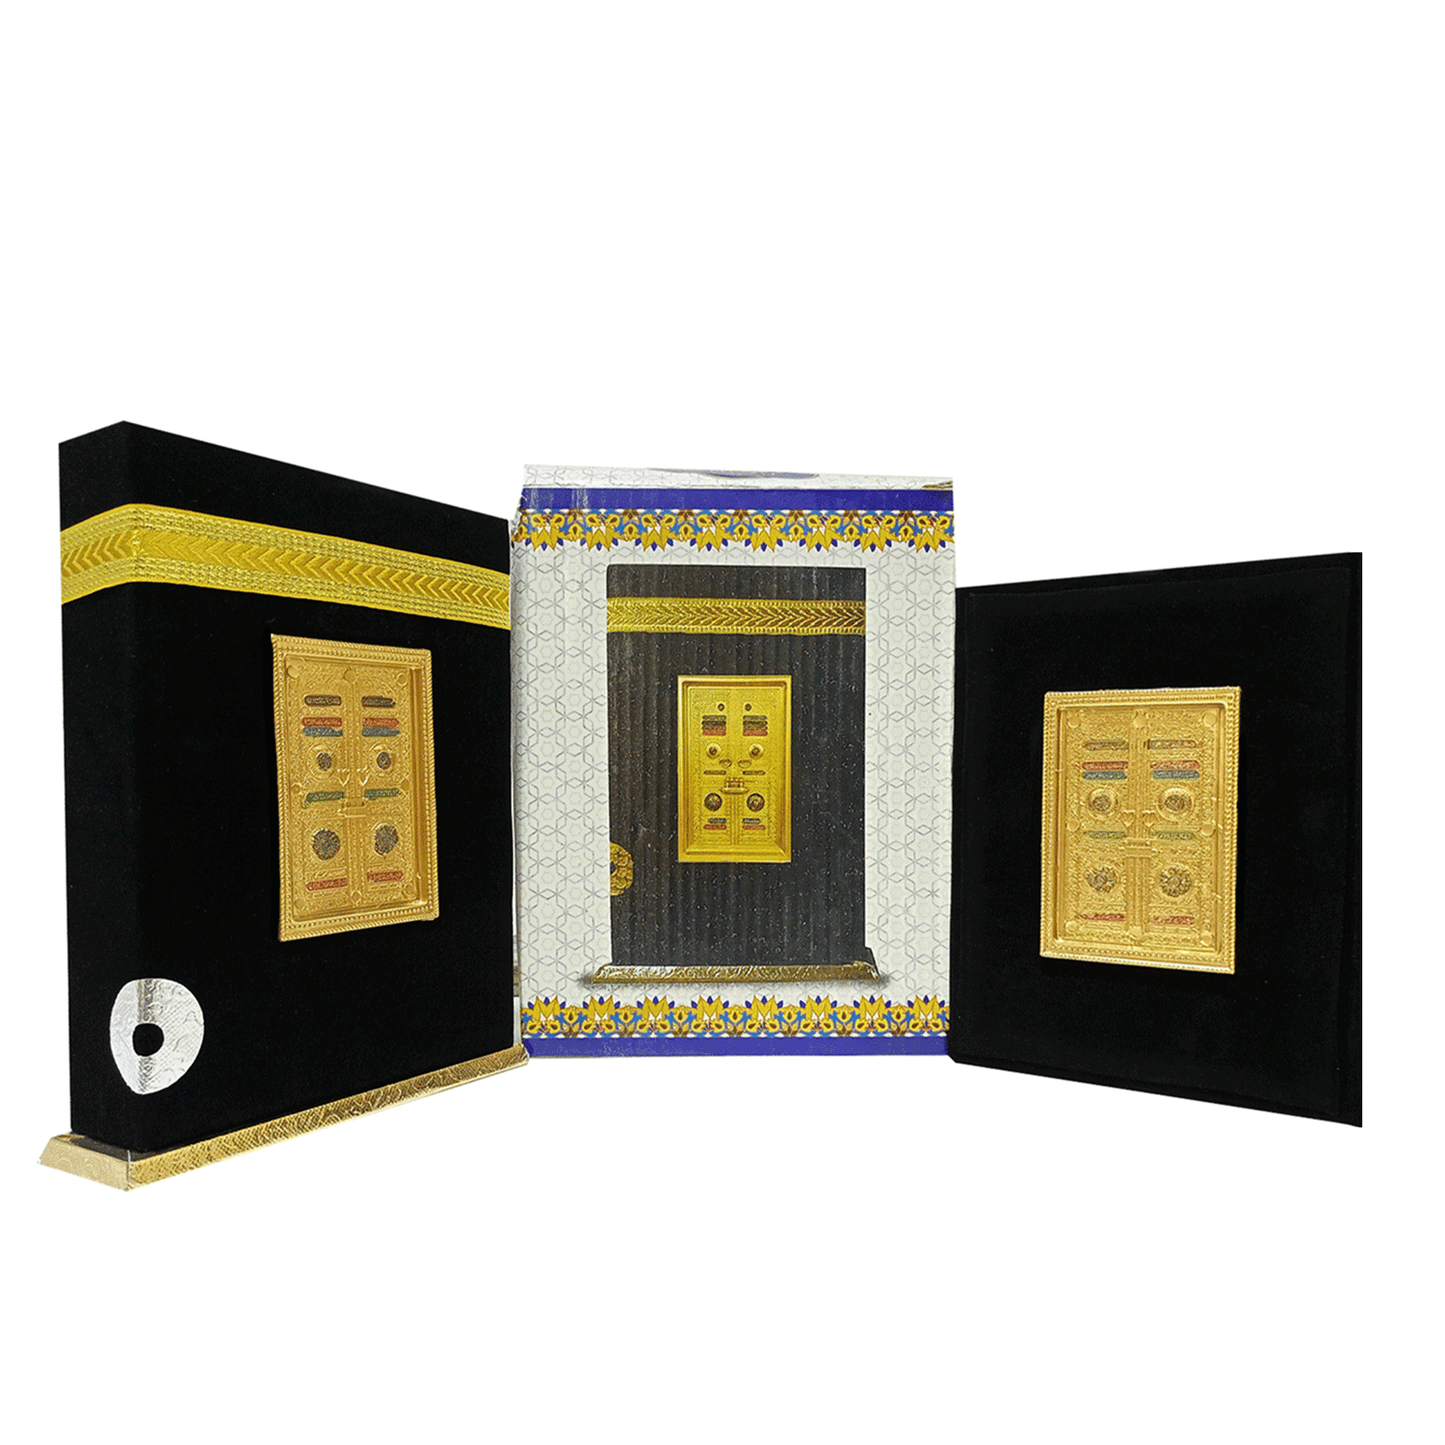 [92/Q] Al-Quran-Ul-Kareem With Kanzul Iman & Khazain-Ul-Irfan (Urdu Translation) - Gift Edition